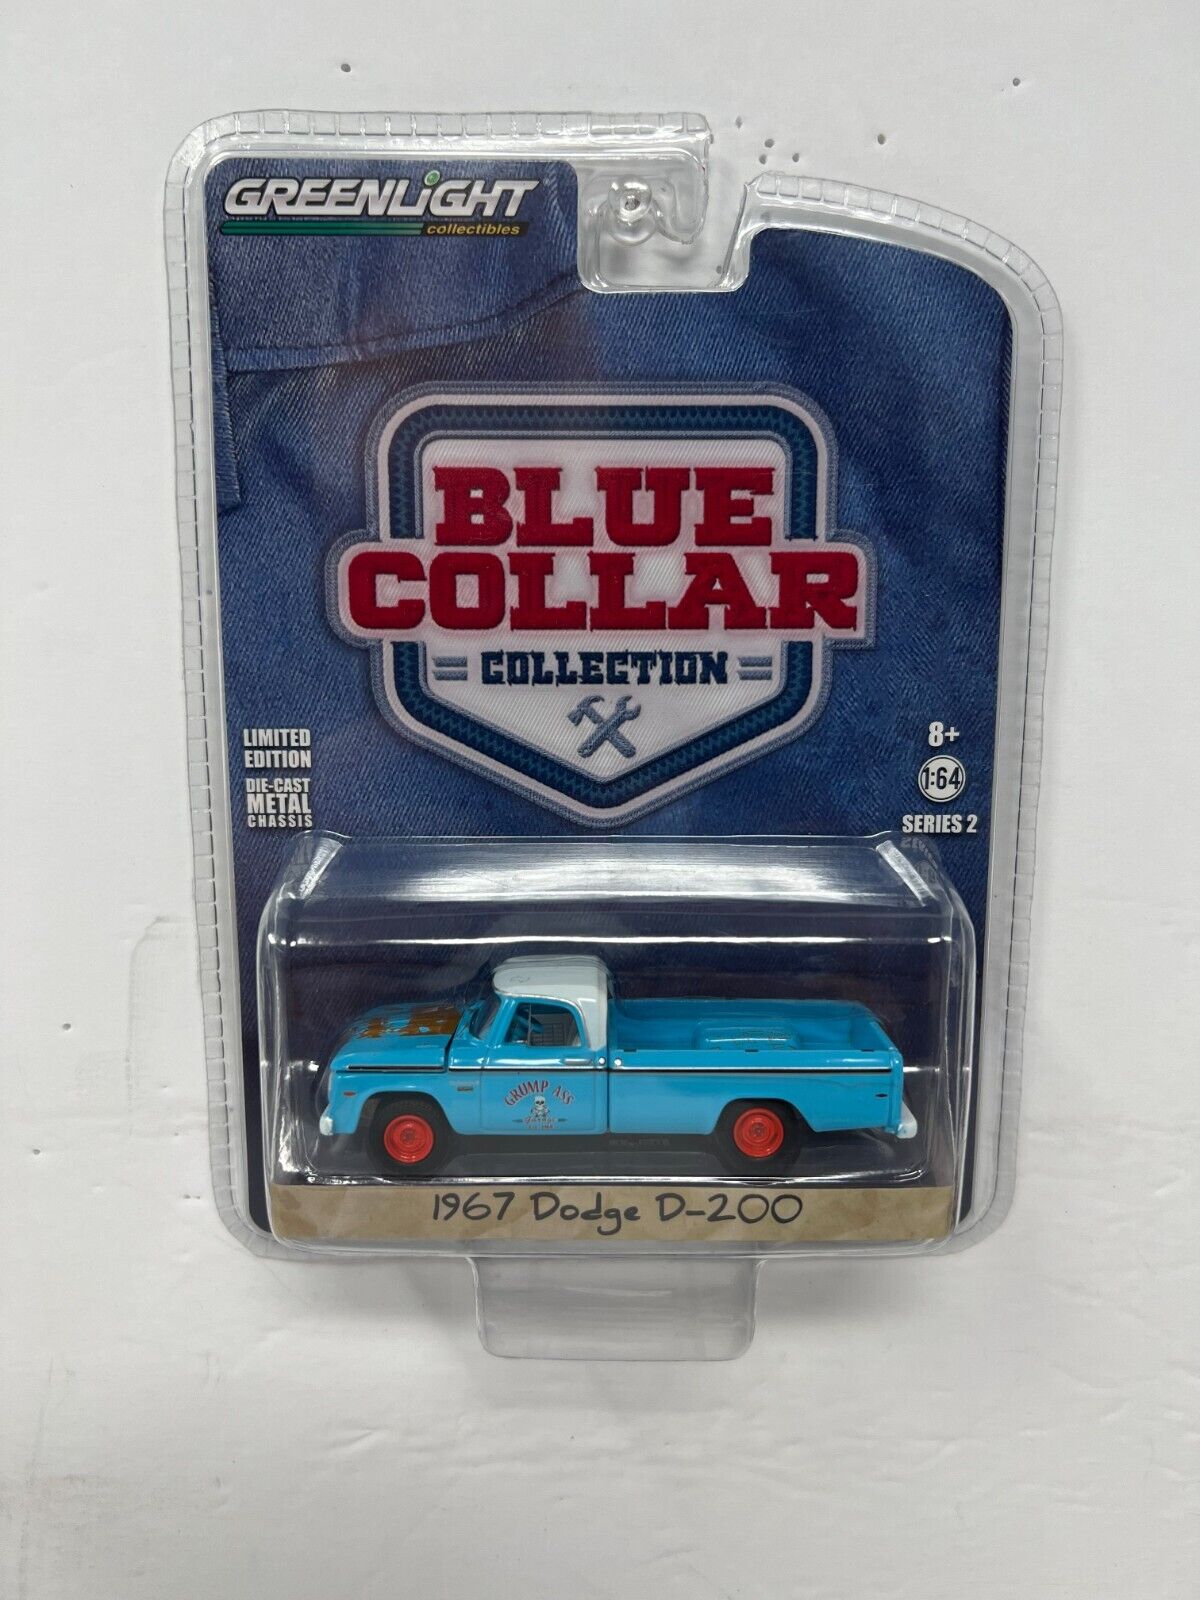 Greenlight Blue Collar 1967 Dodge D-200 1:64 Diecast